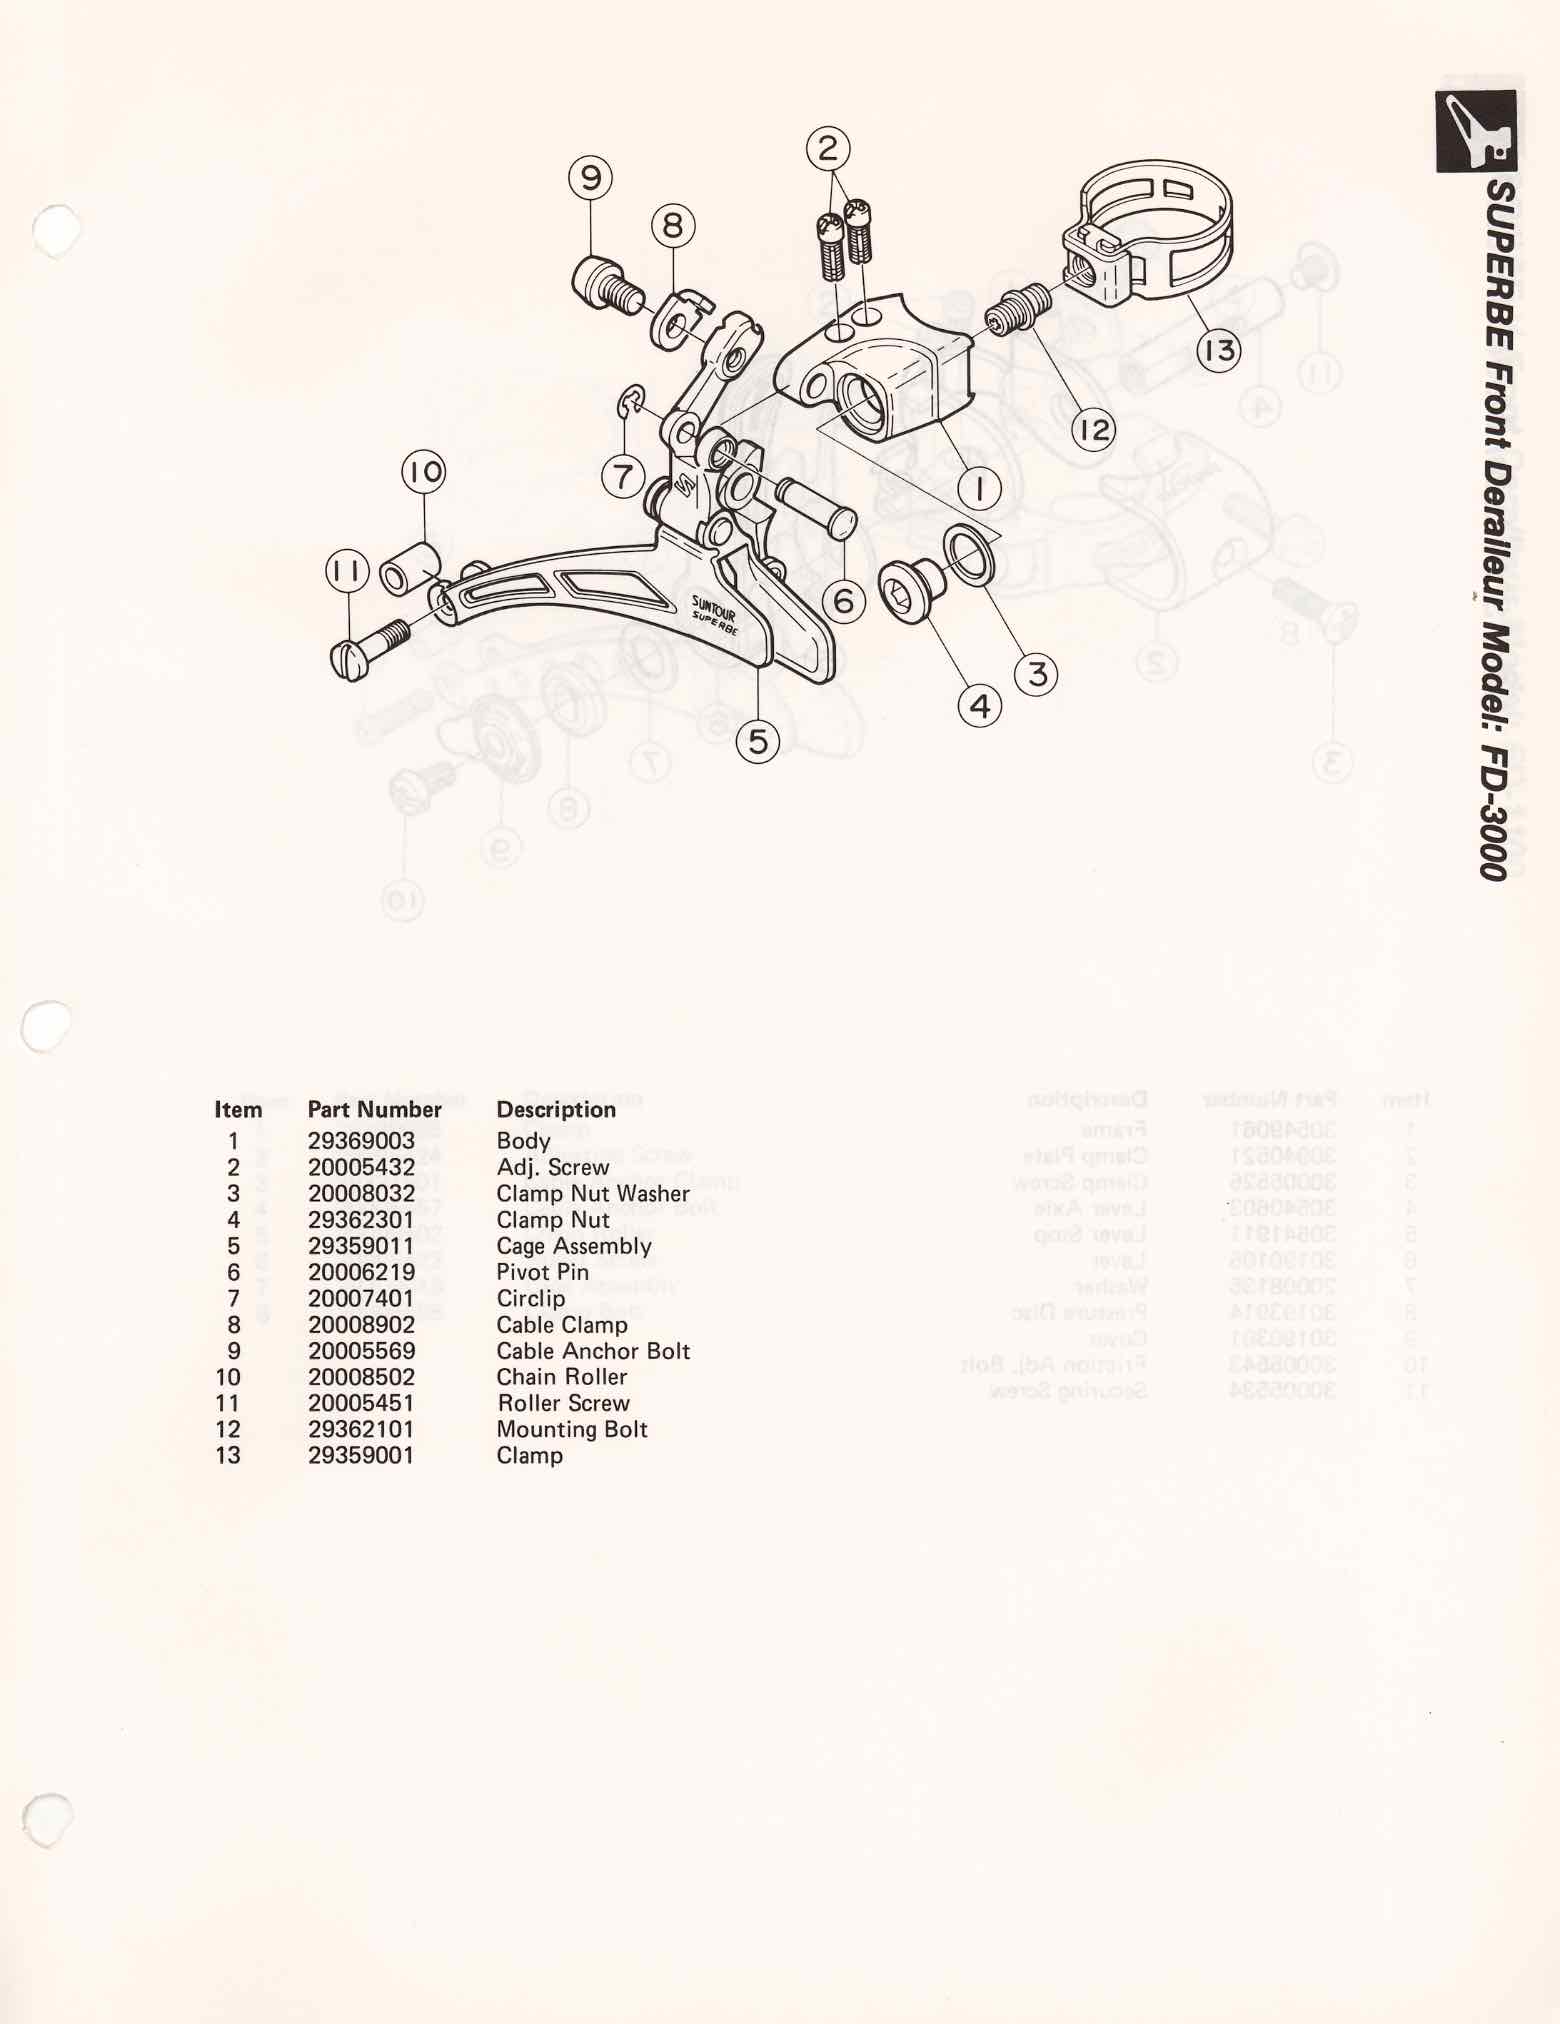 SunTour Small Parts Catalog - 1983? scan 28 main image